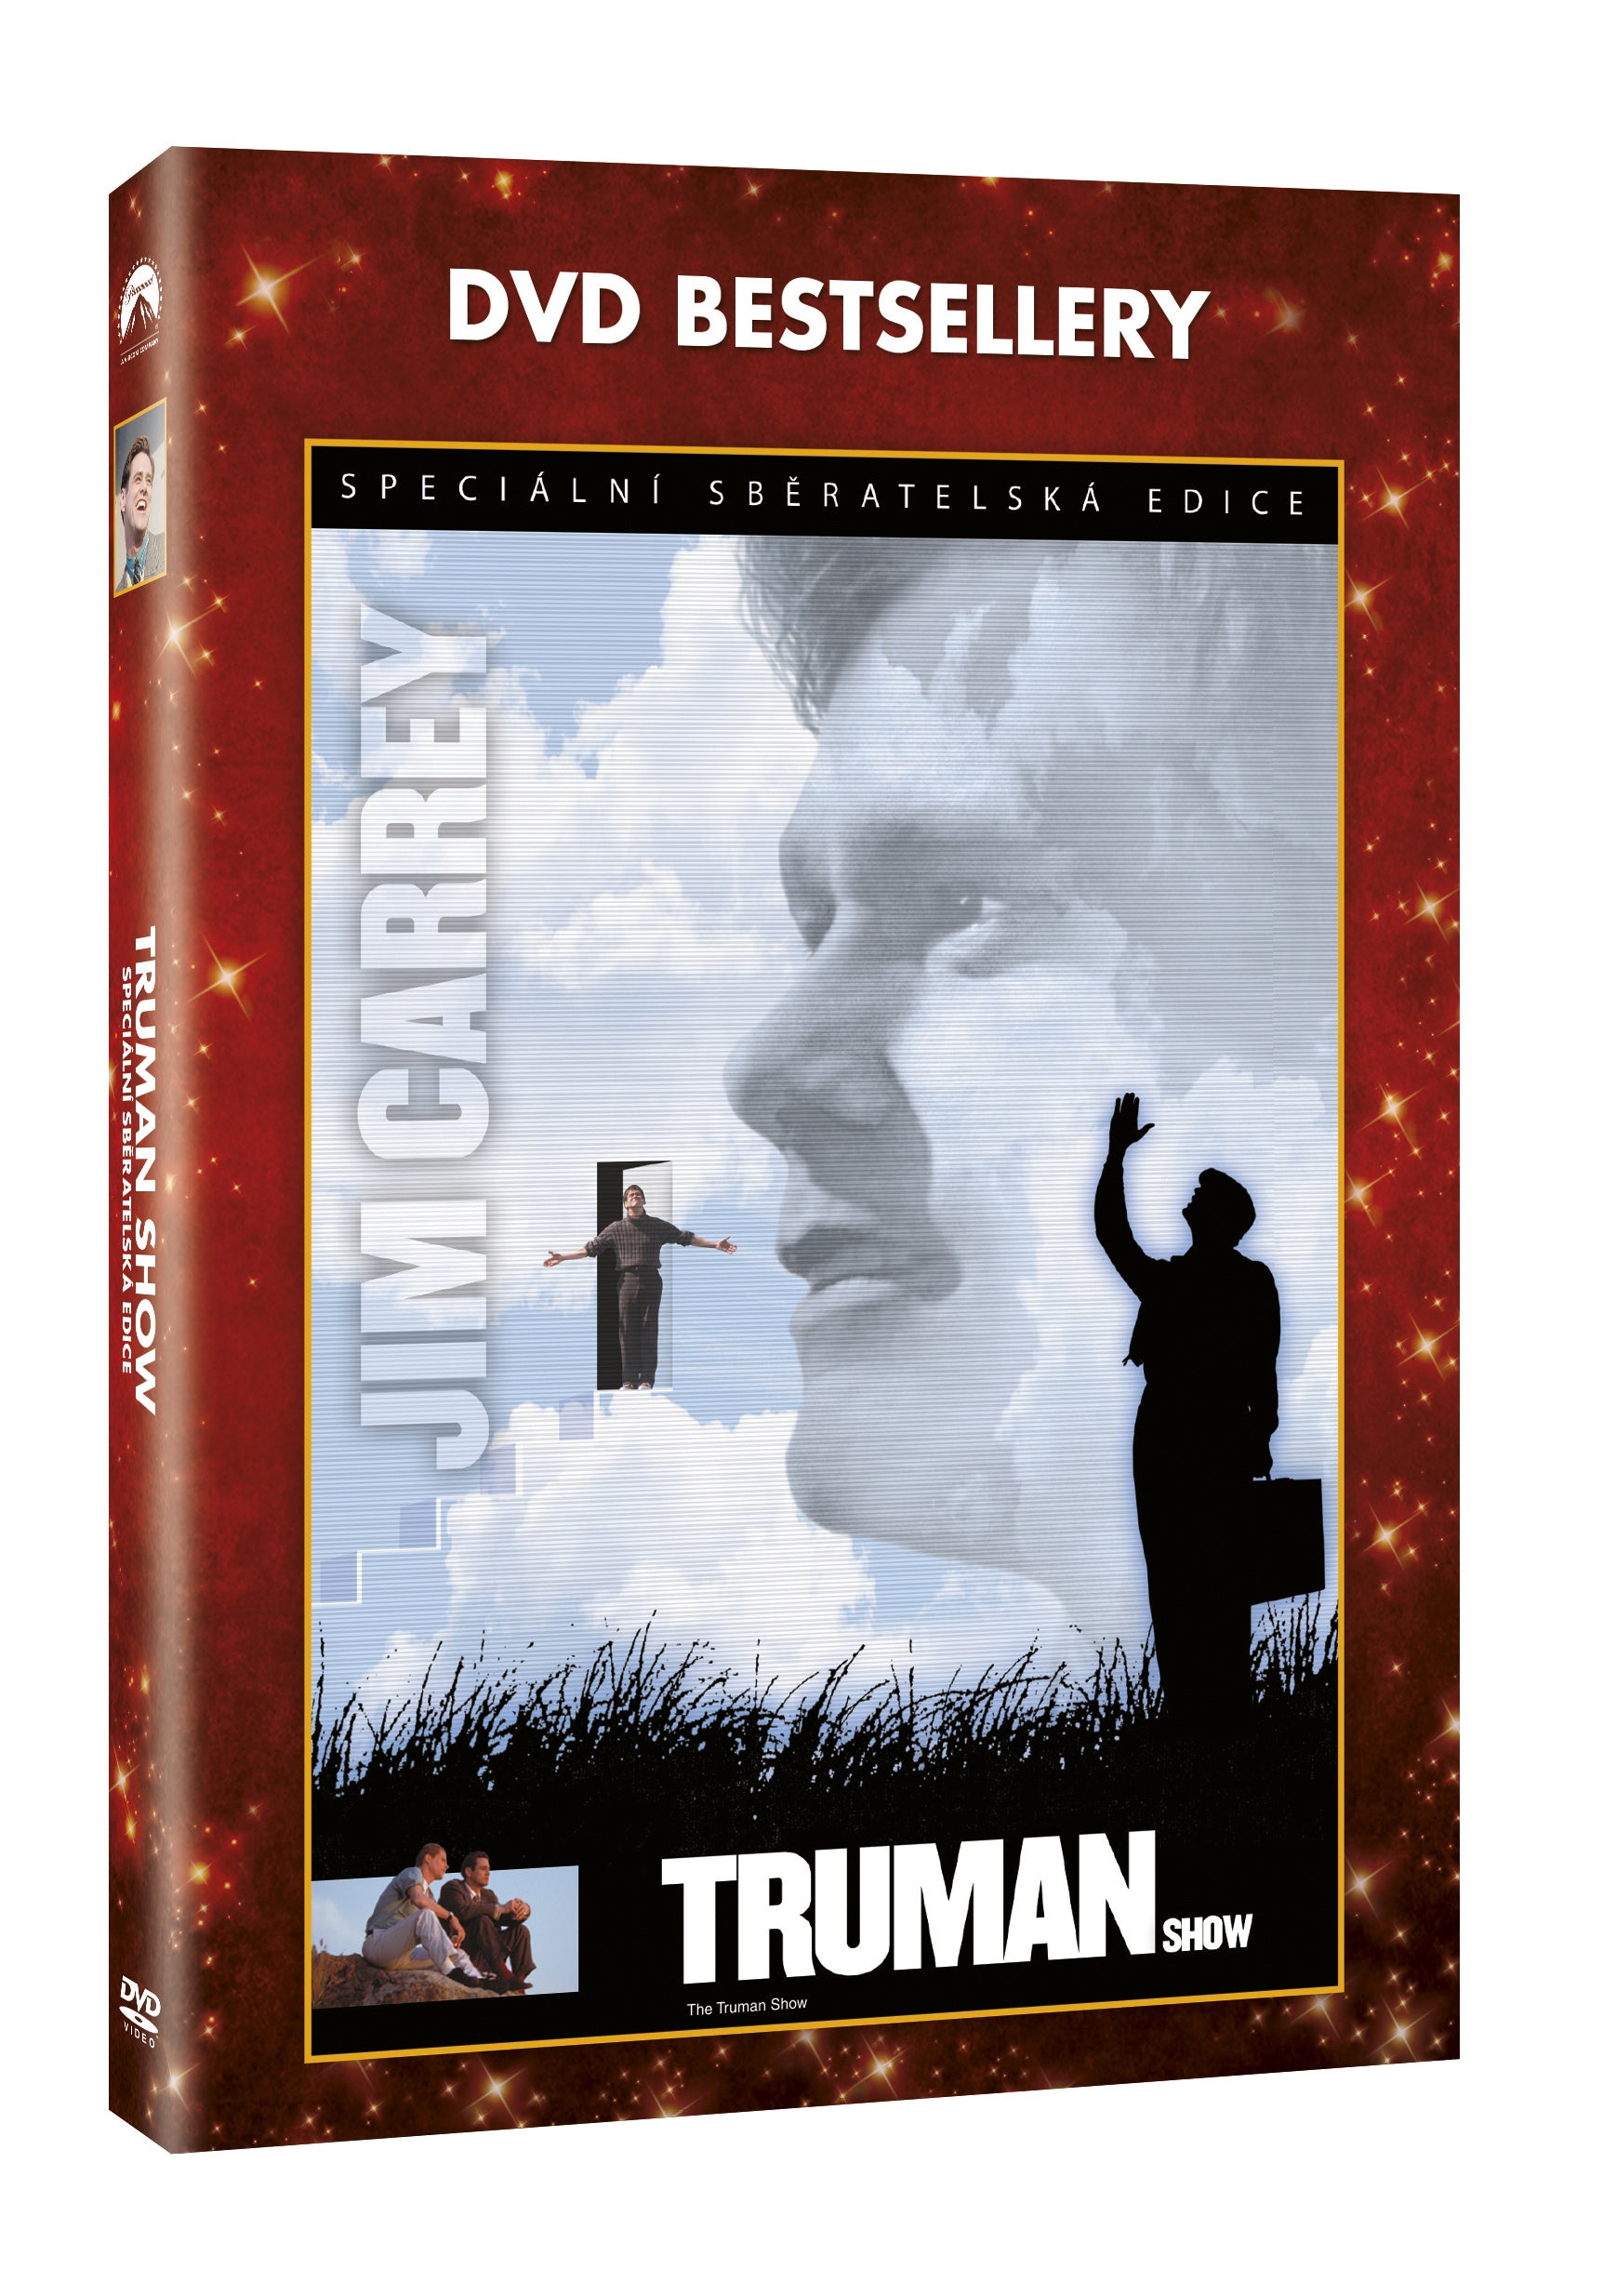 Truman Show SCE DVD - Edice DVD Bestseller / Truman Show, The (Special Edition)